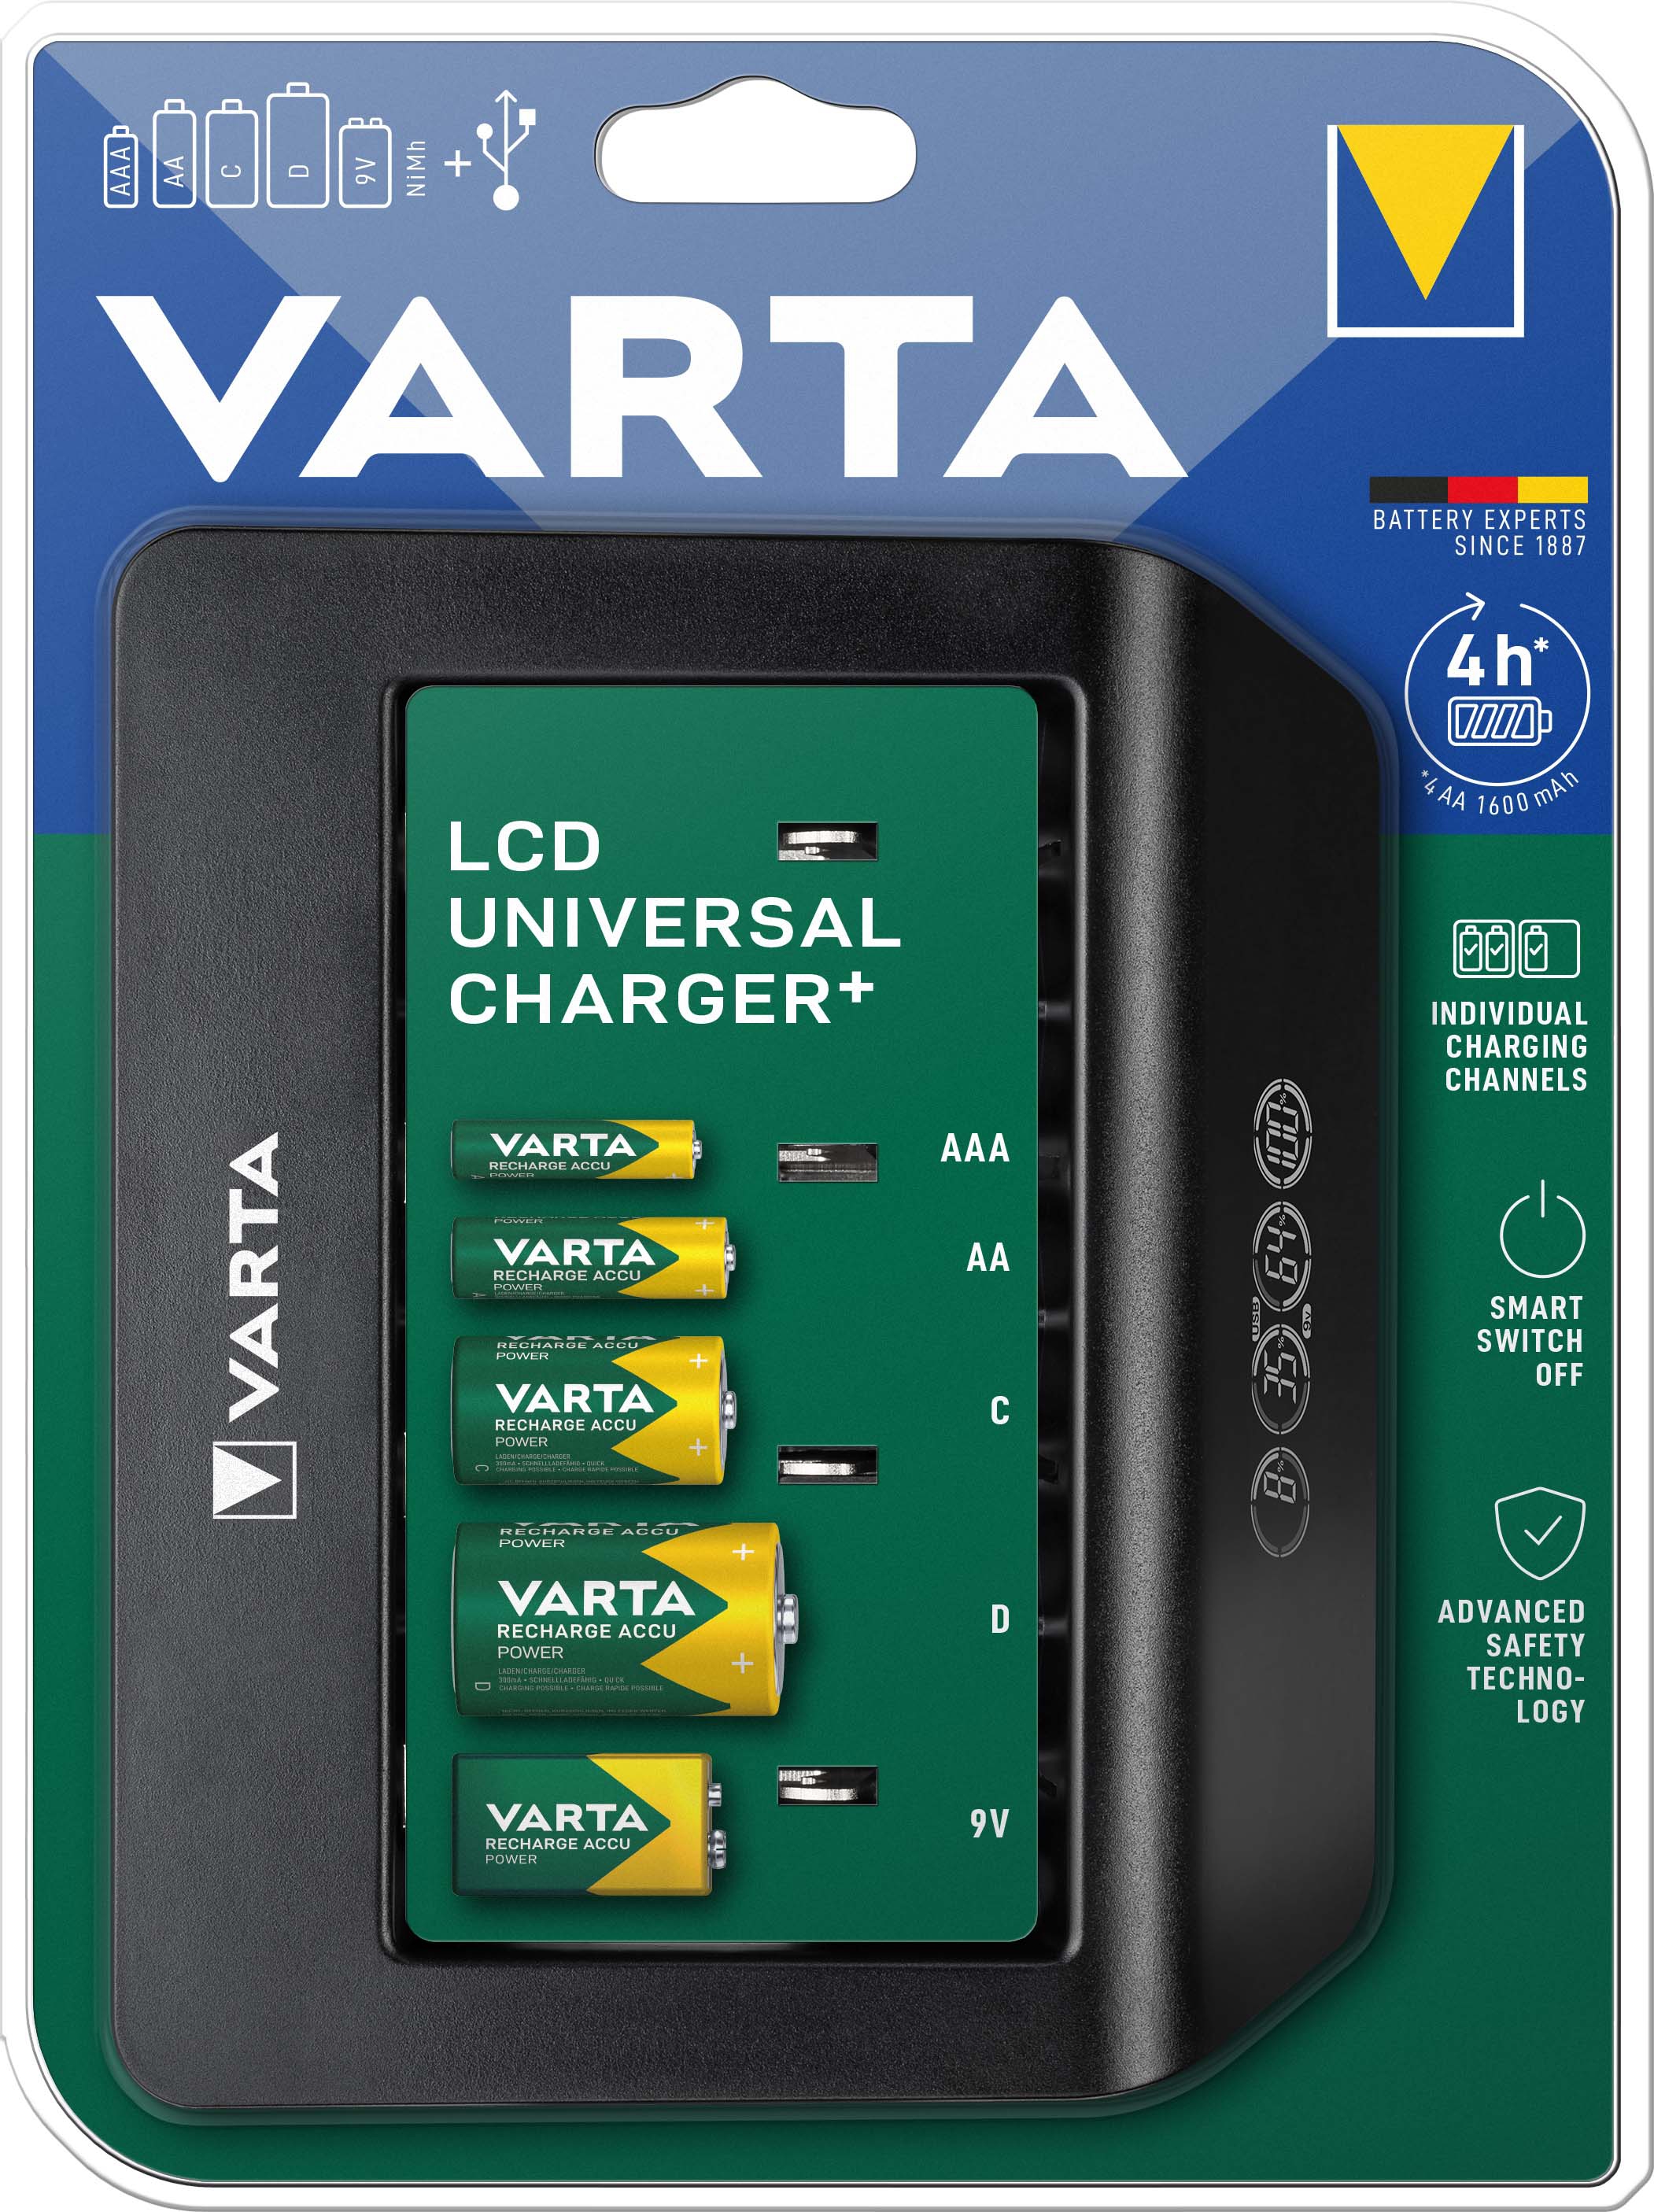 Varta 57688101401 LCD Universal Charger+